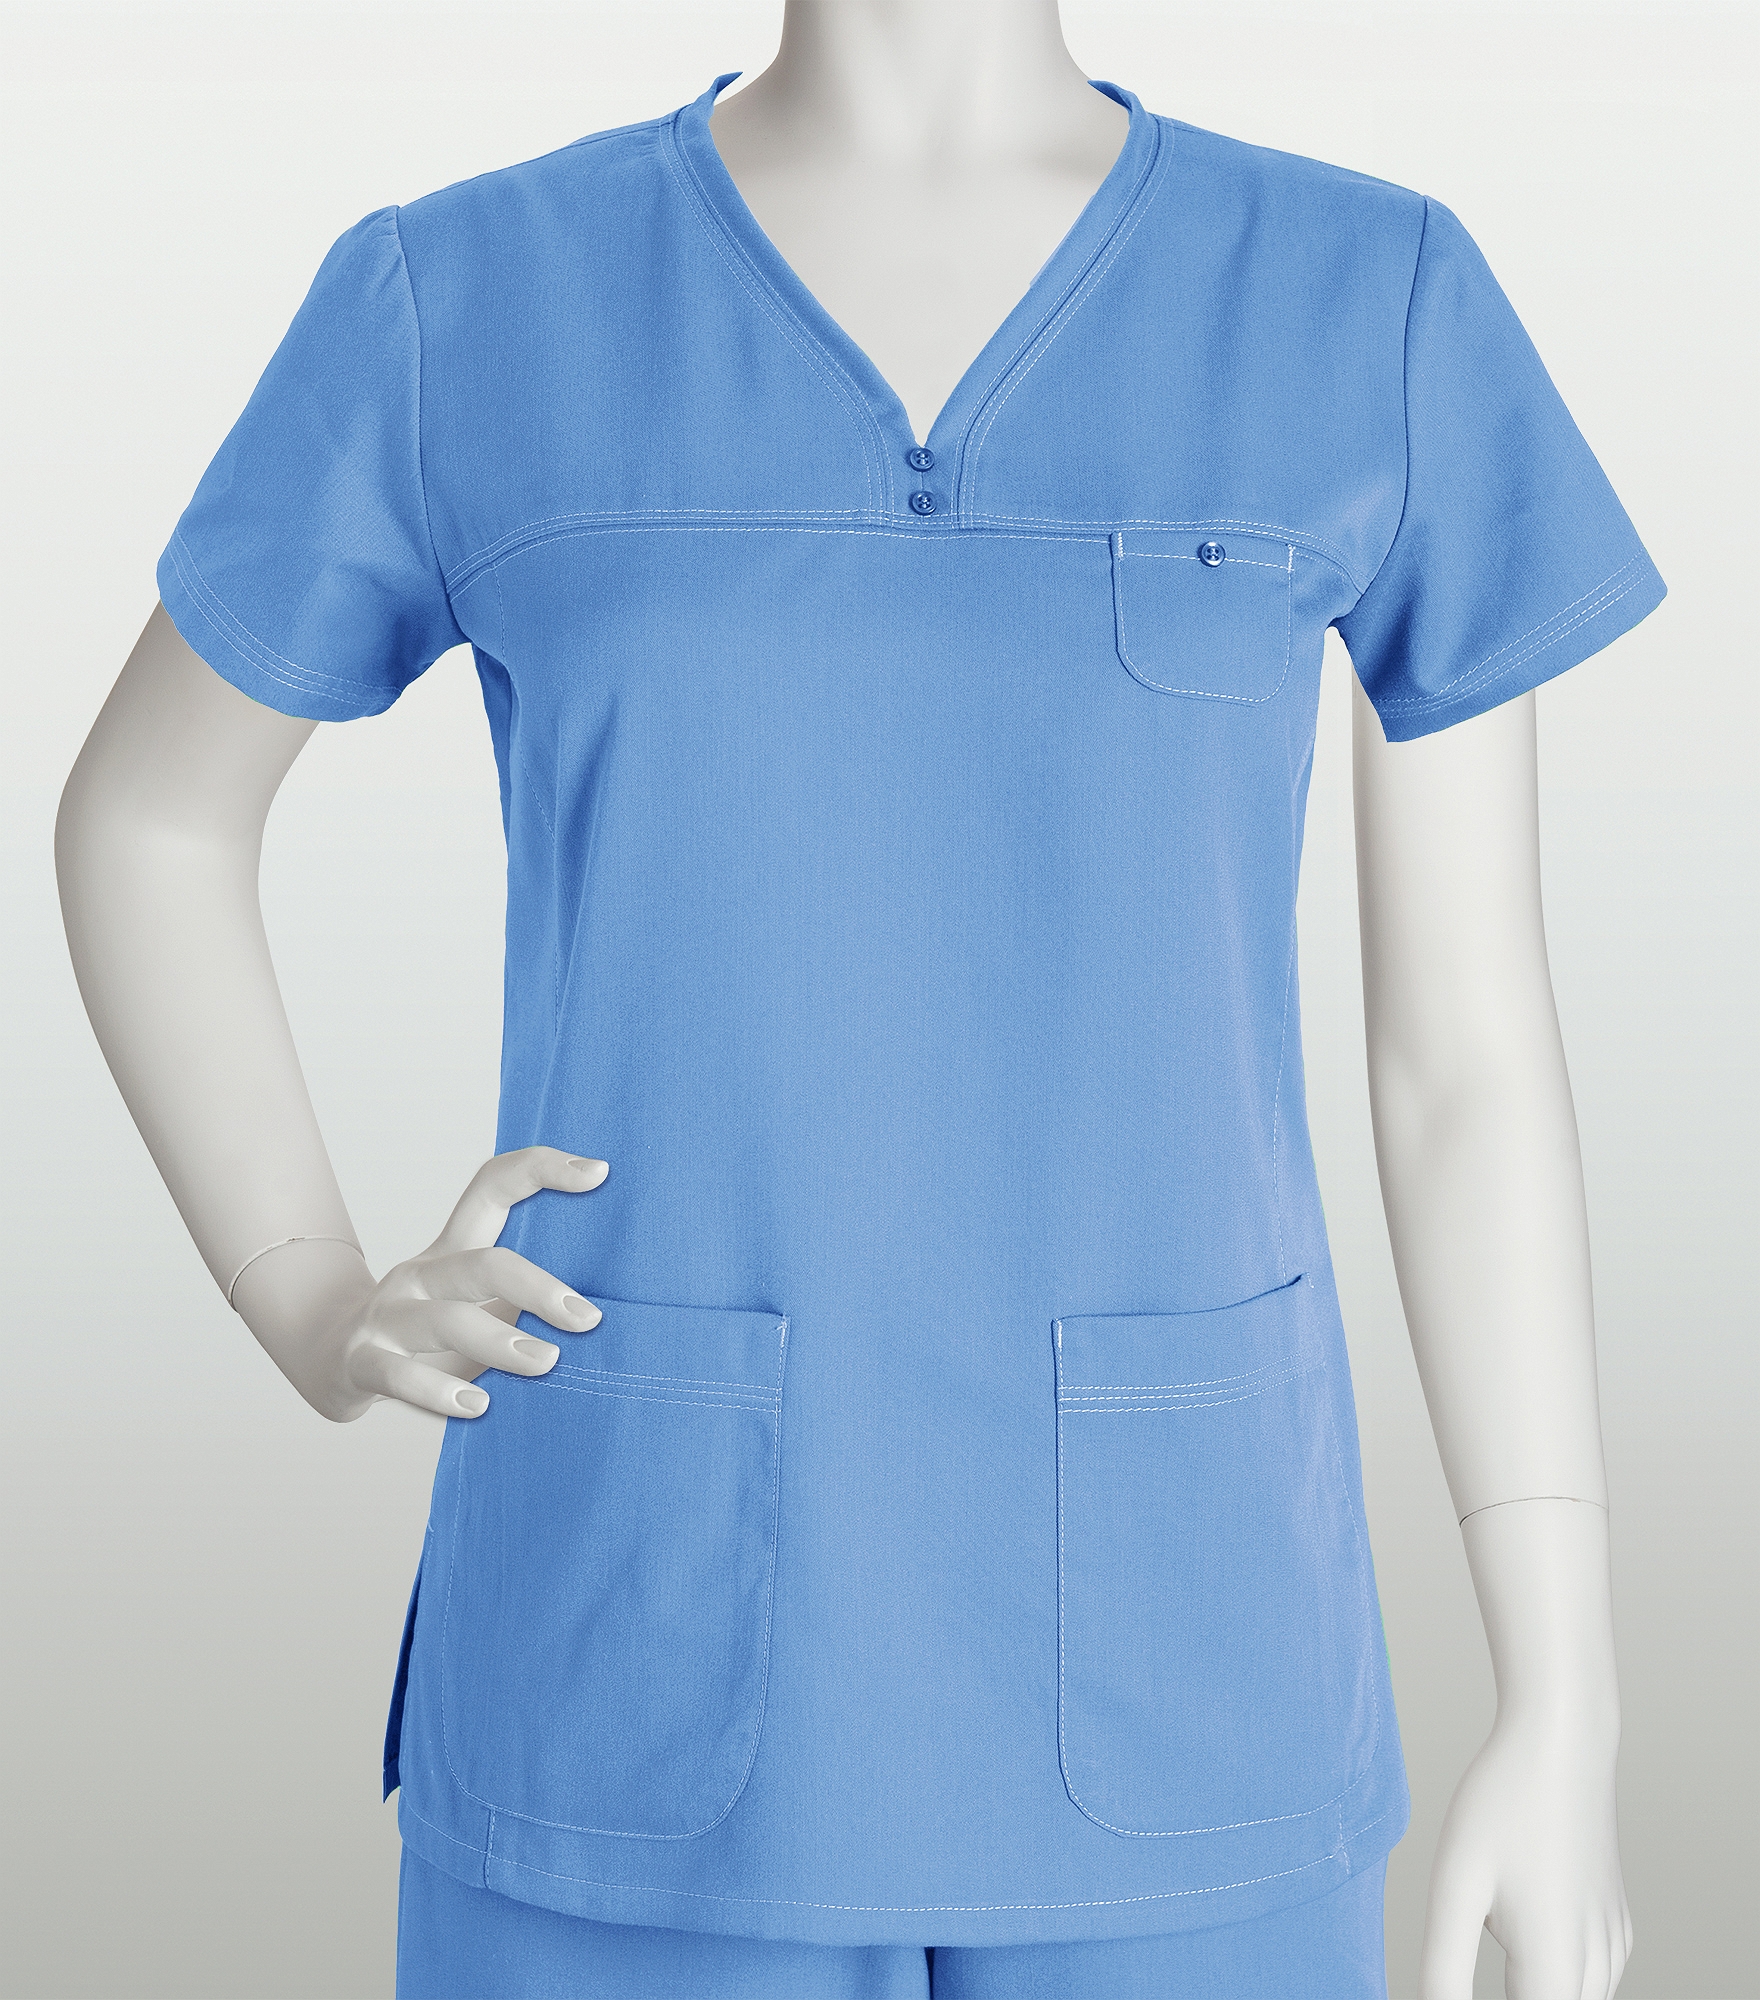 Grey's Anatomy Women's Solid V-Neck Scrub Top With Stitching-41340